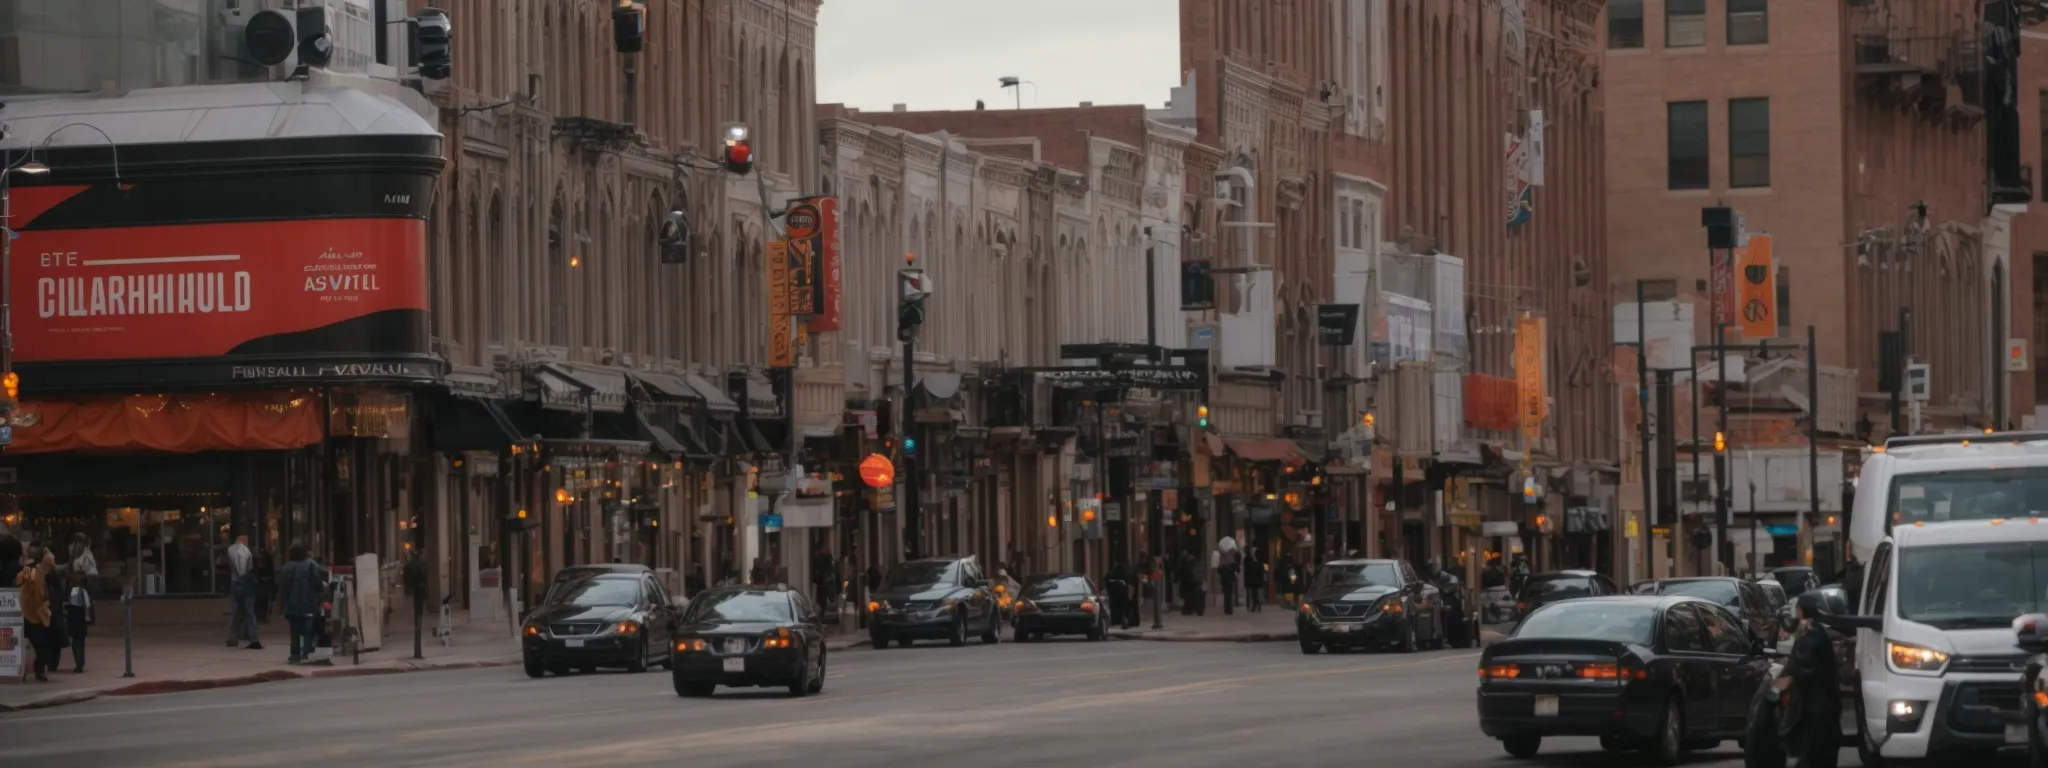 a bustling denver city street with visible storefronts and active online marketing billboards.